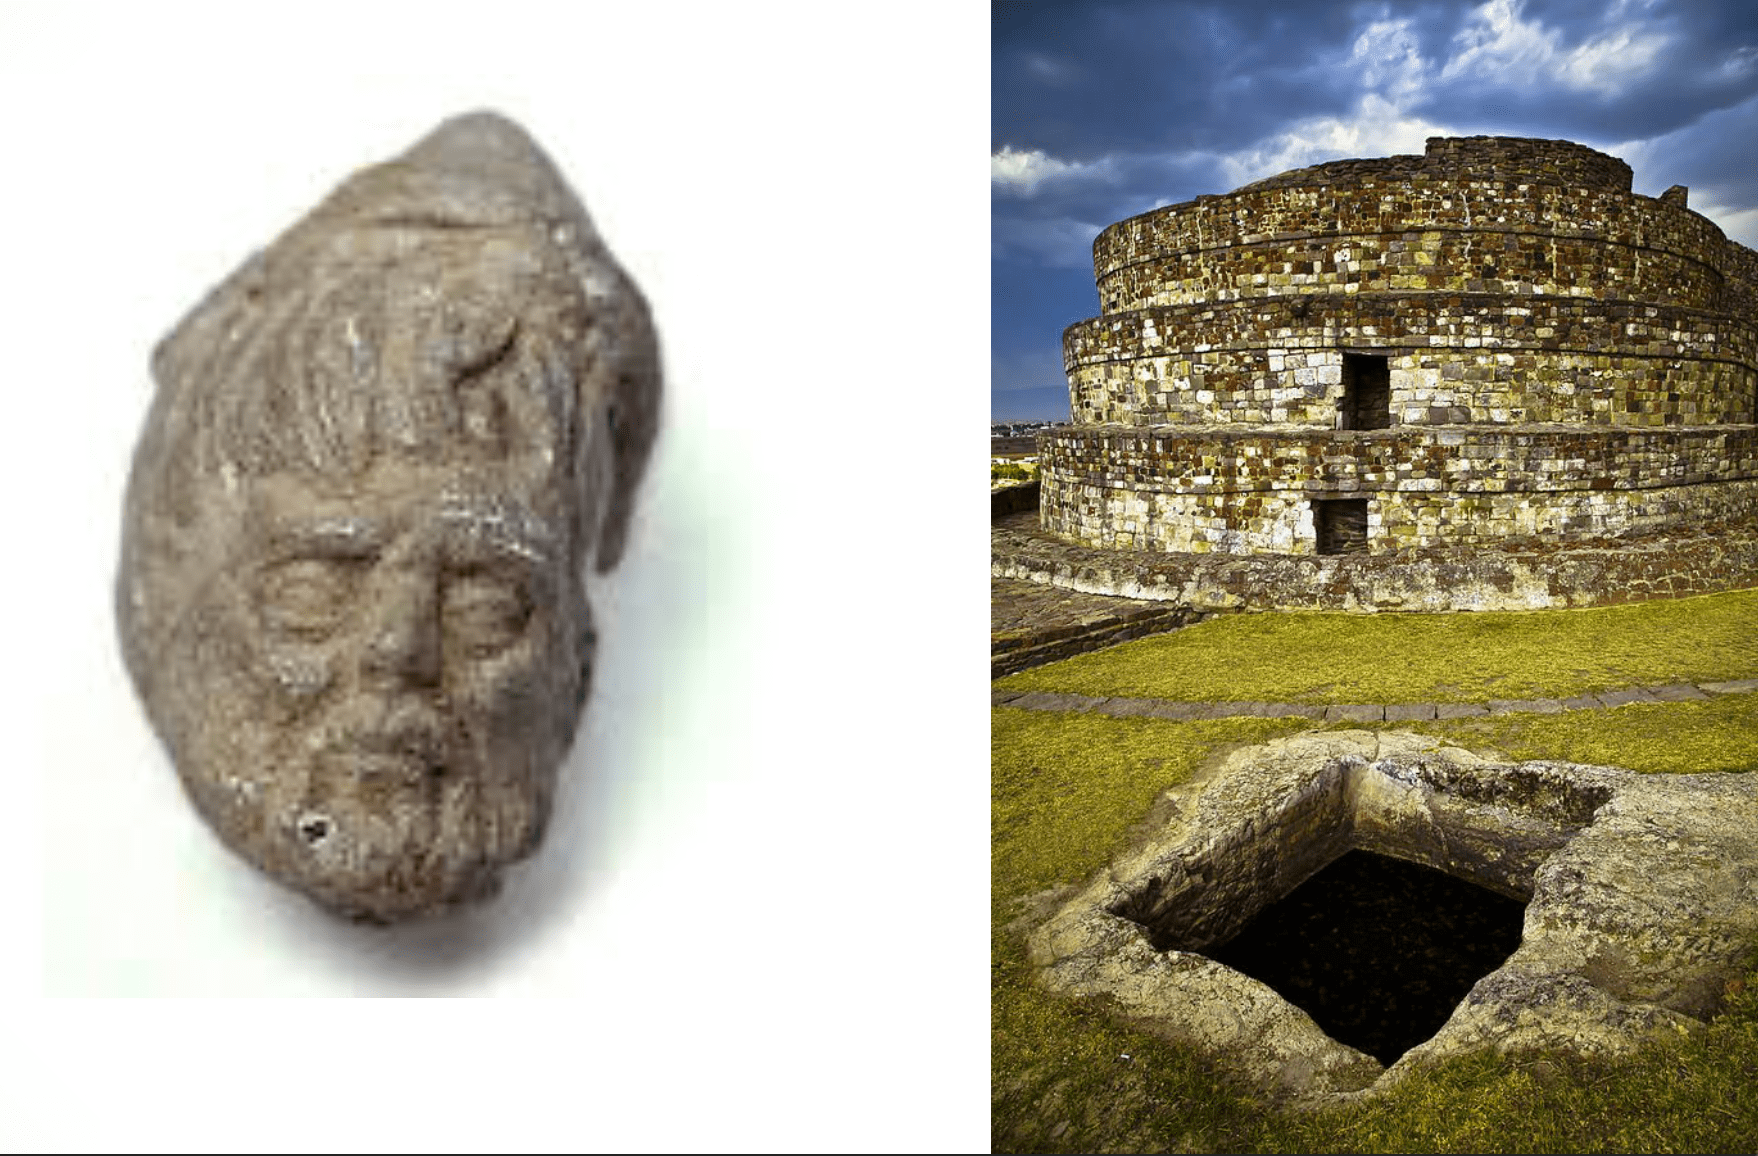 Teorías sobre la cabeza de terracota romana encontrada en Calixtlahuaca